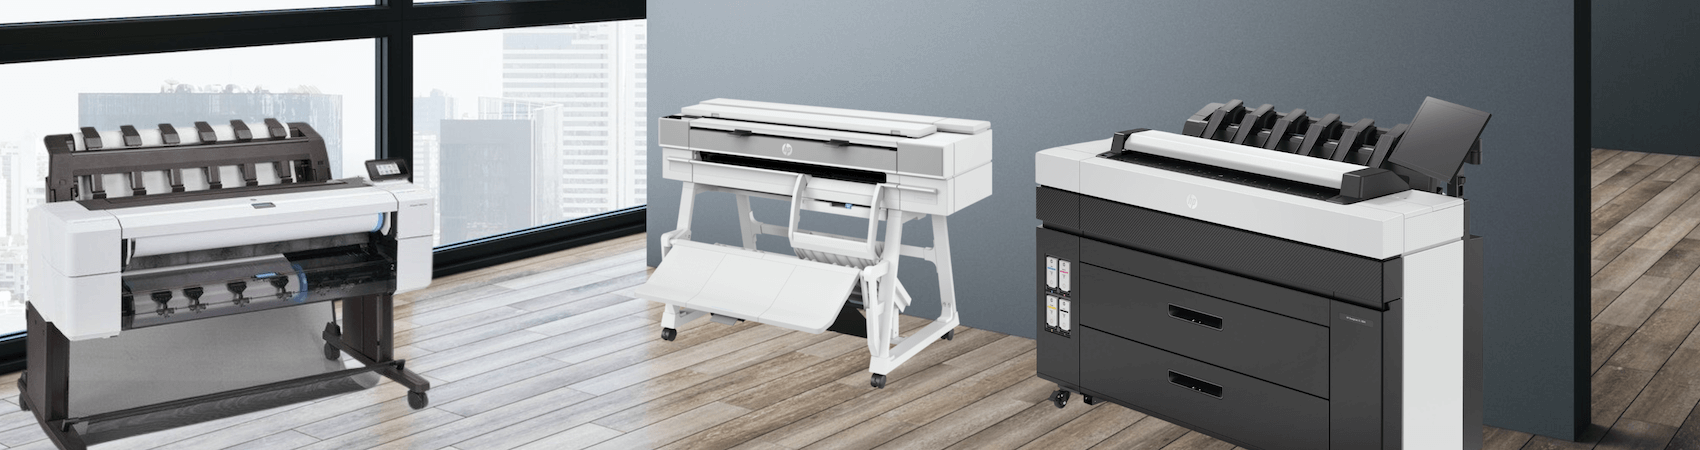 Compact HP DesignJet Printer